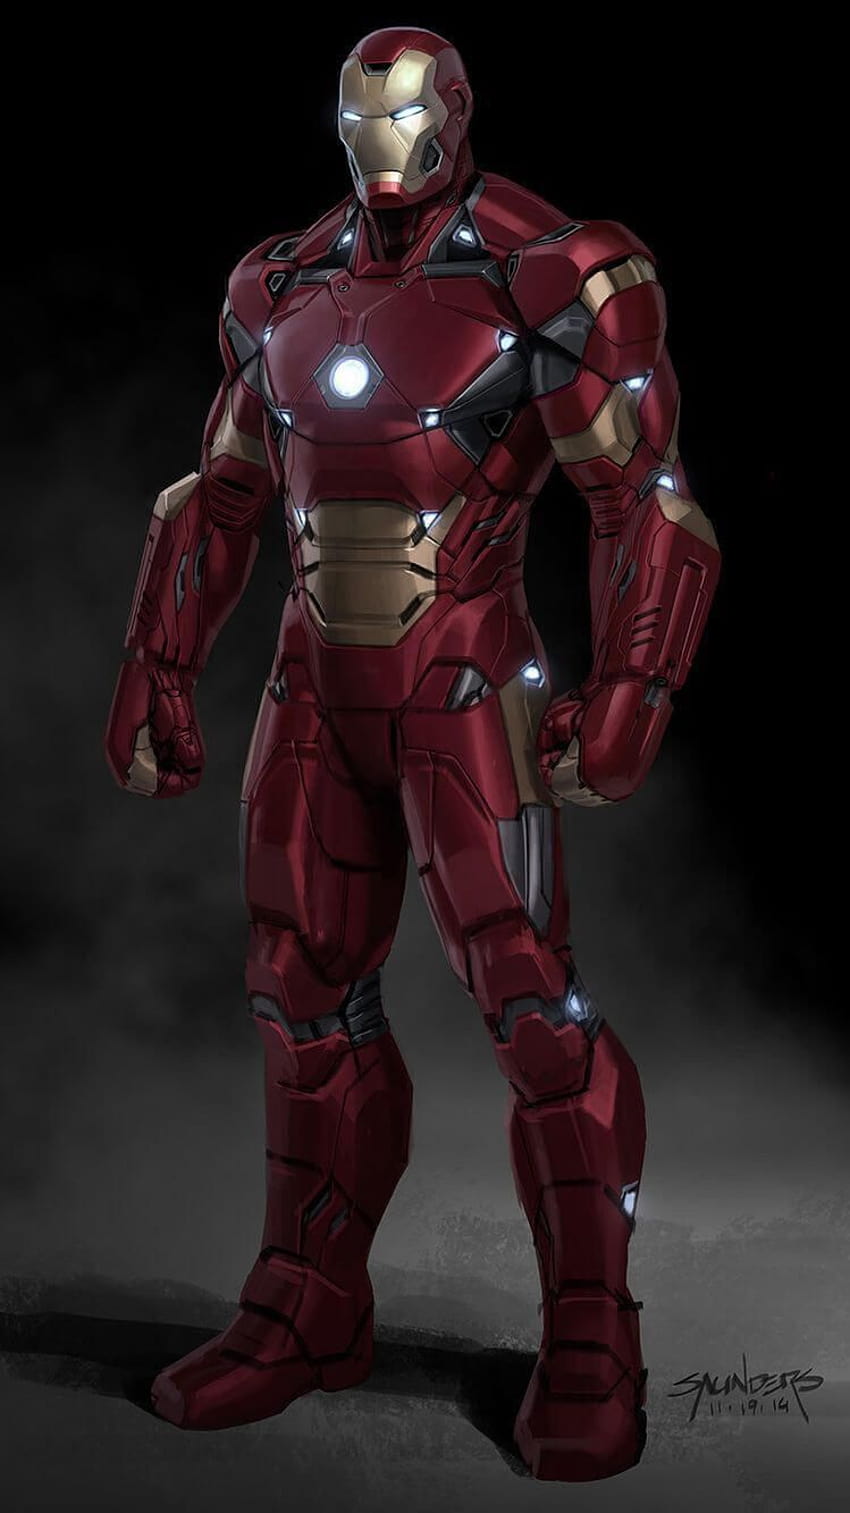 Drawing Iron Man Avengers: Endgame Suit - video Dailymotion